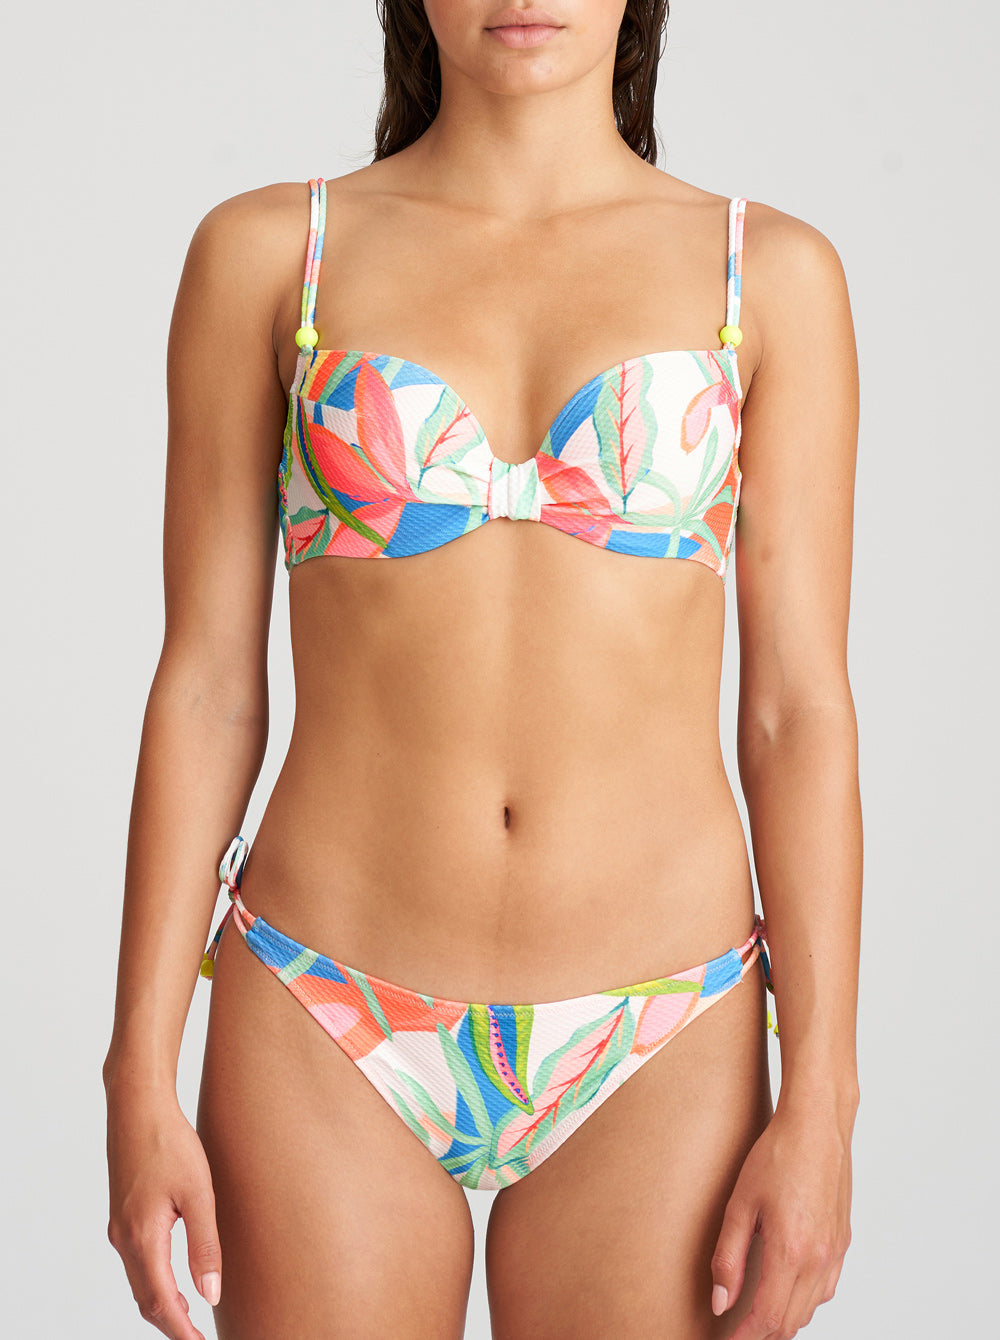 Tarifa Bikini Brief With Ropes - Tropical Blossom